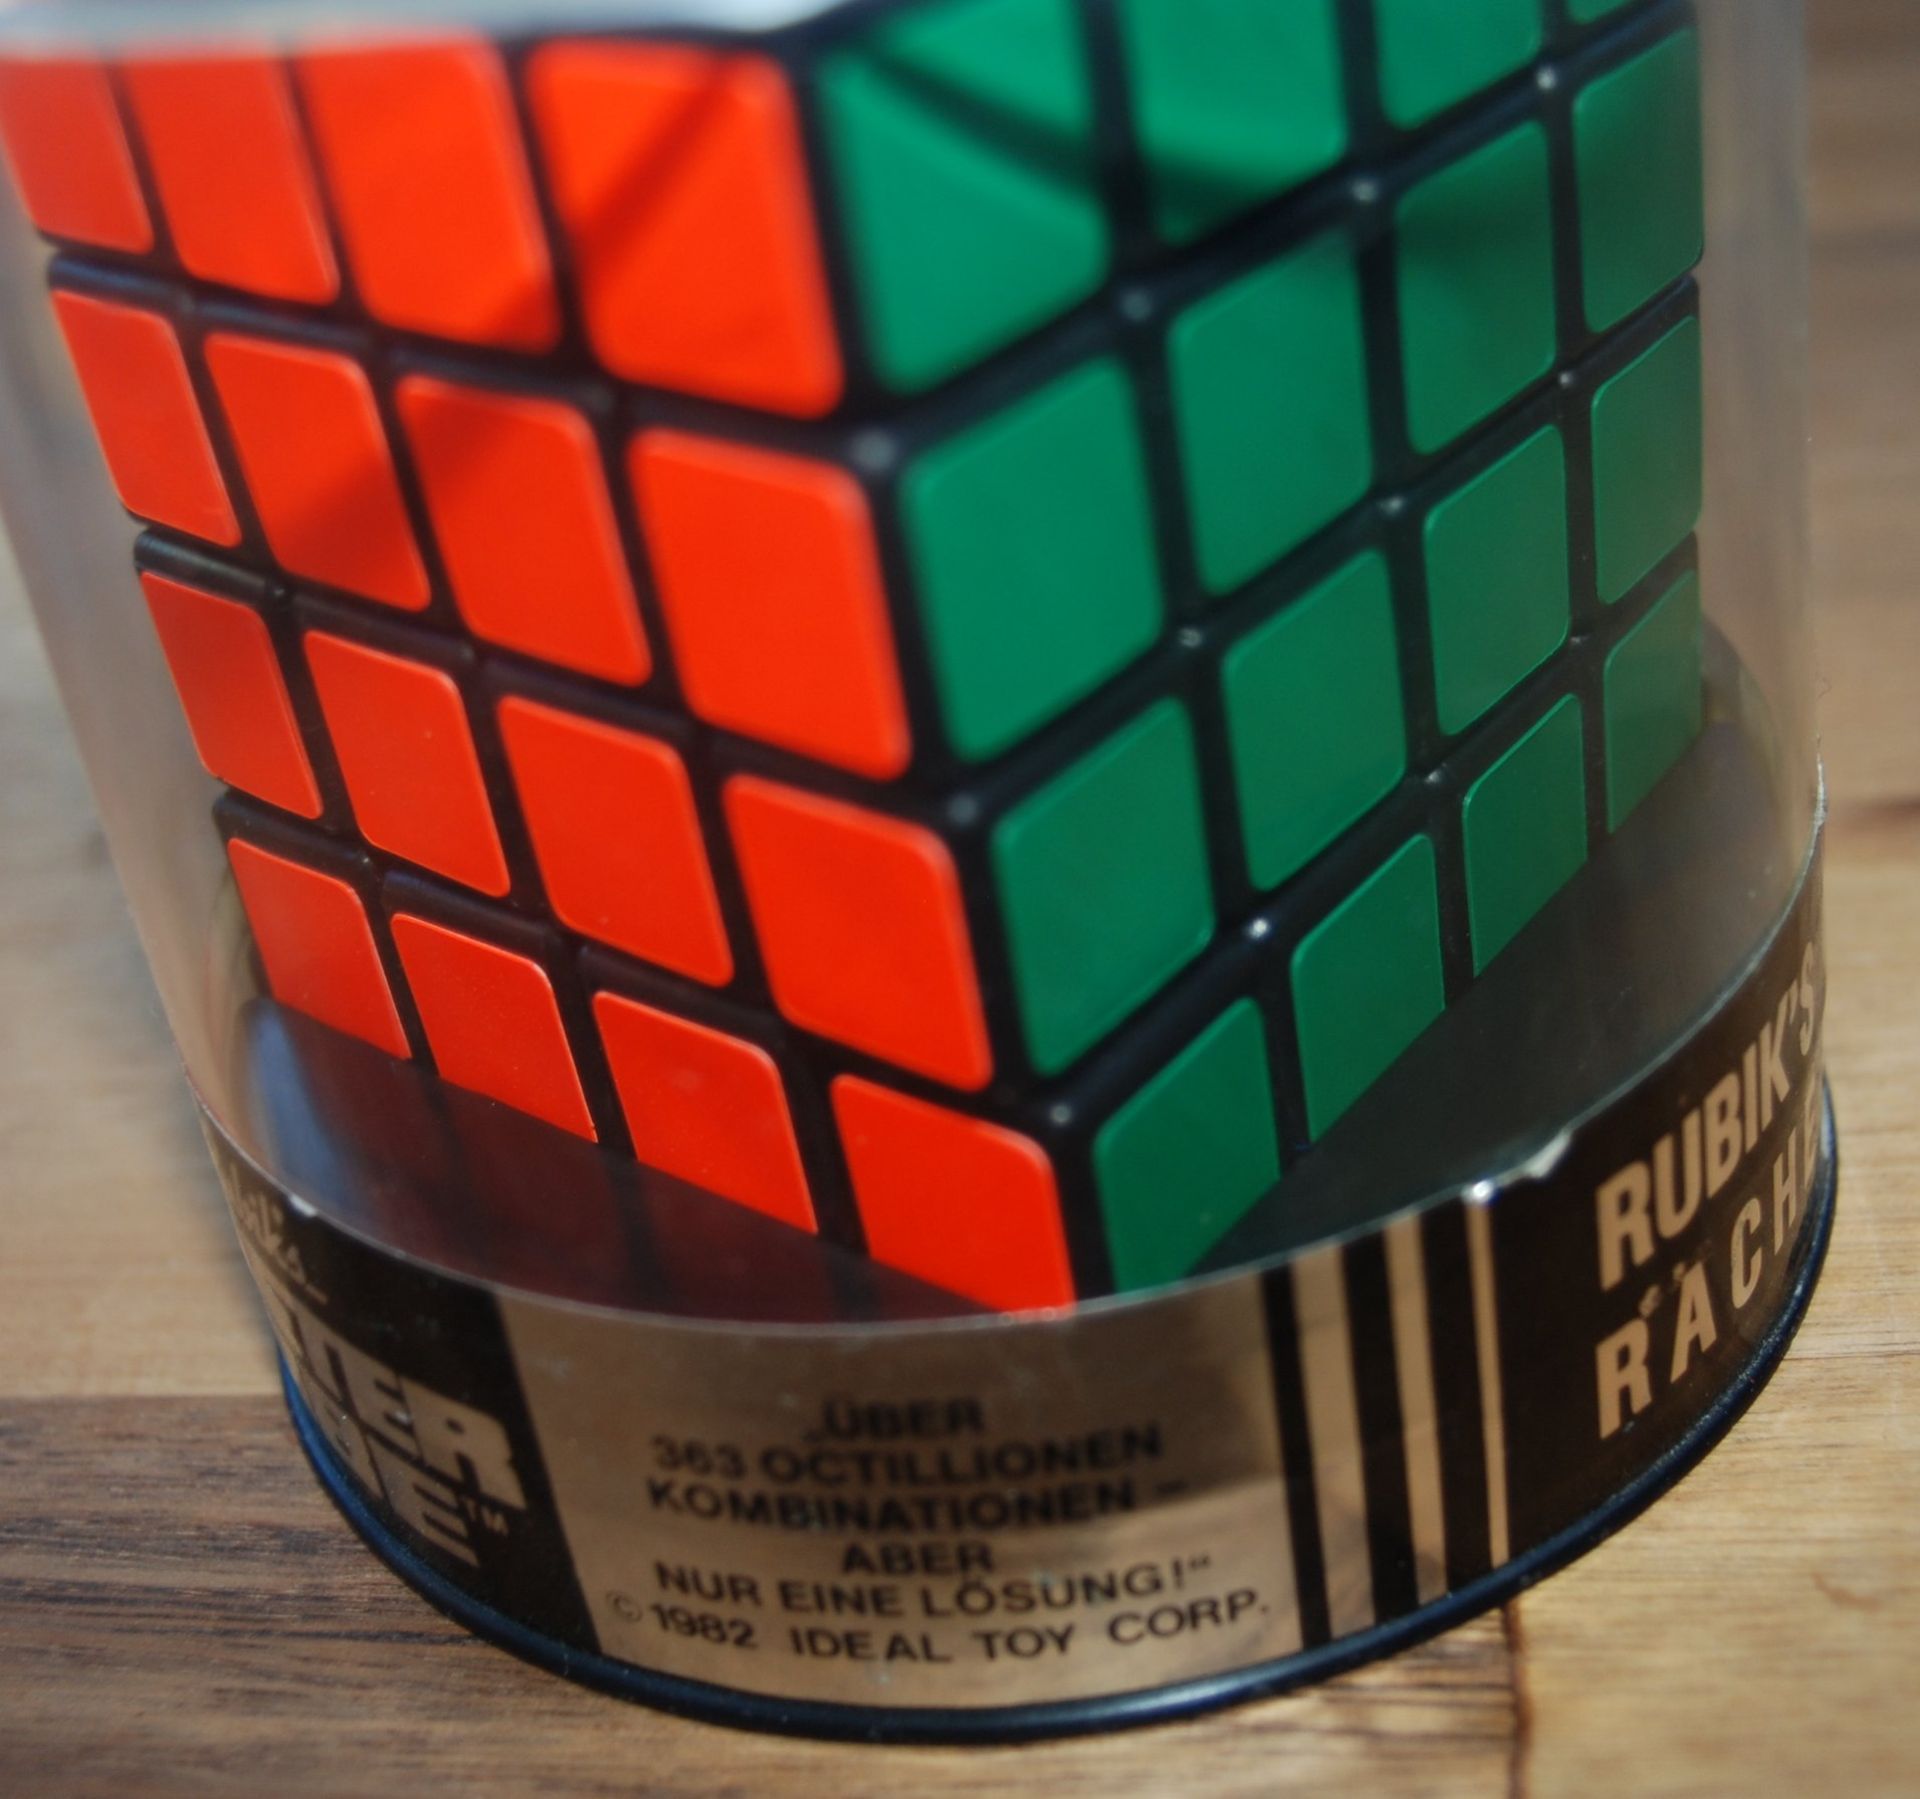 Rubik's Rache, Zauberwürfel 4x4, neu in orig. Verpackung, 198 - Bild 3 aus 6